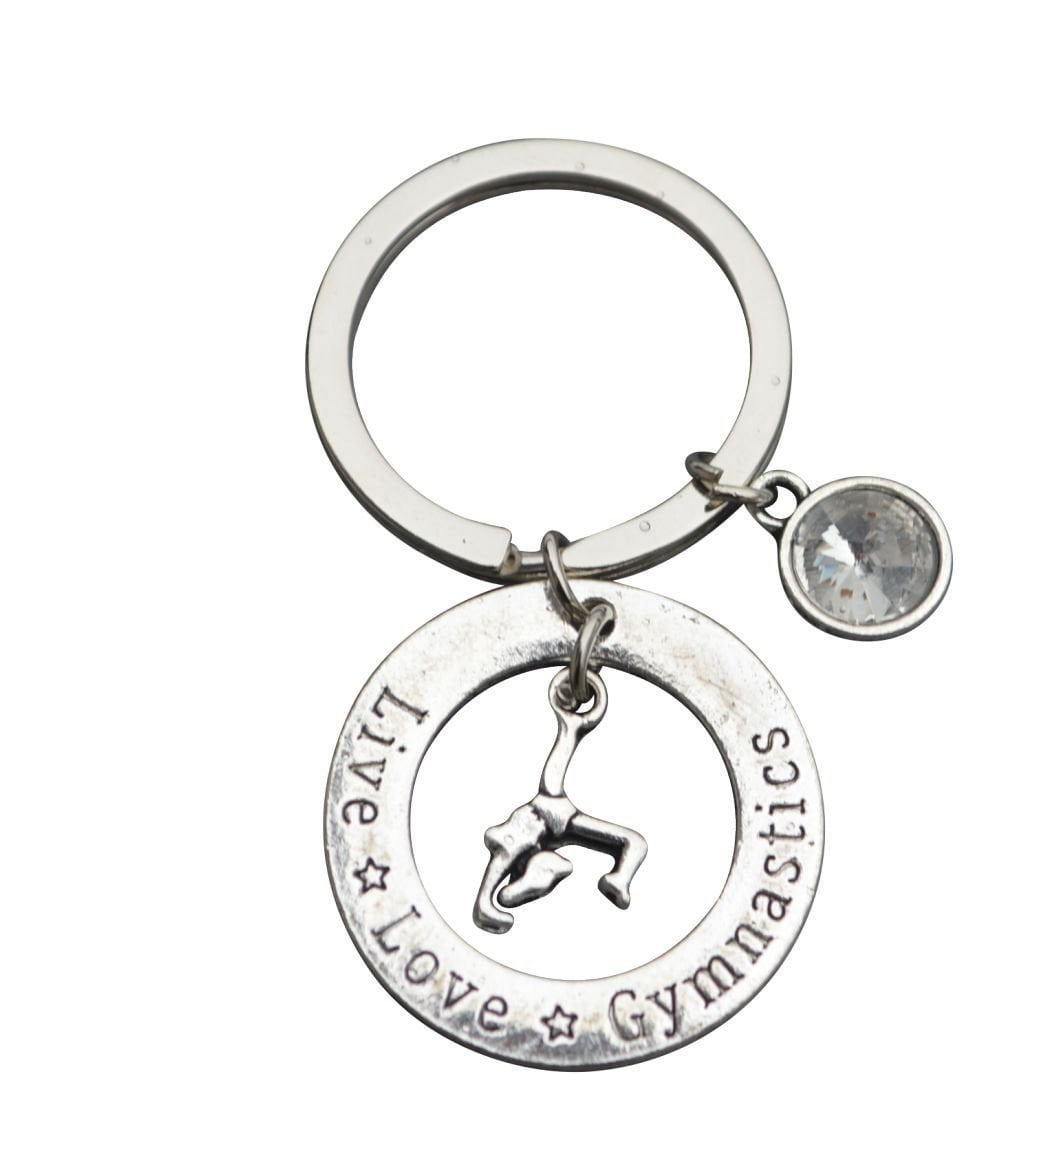 Details about   2017 fashion I Love Gymnastics keychain women men jewelry charms key ring #63 